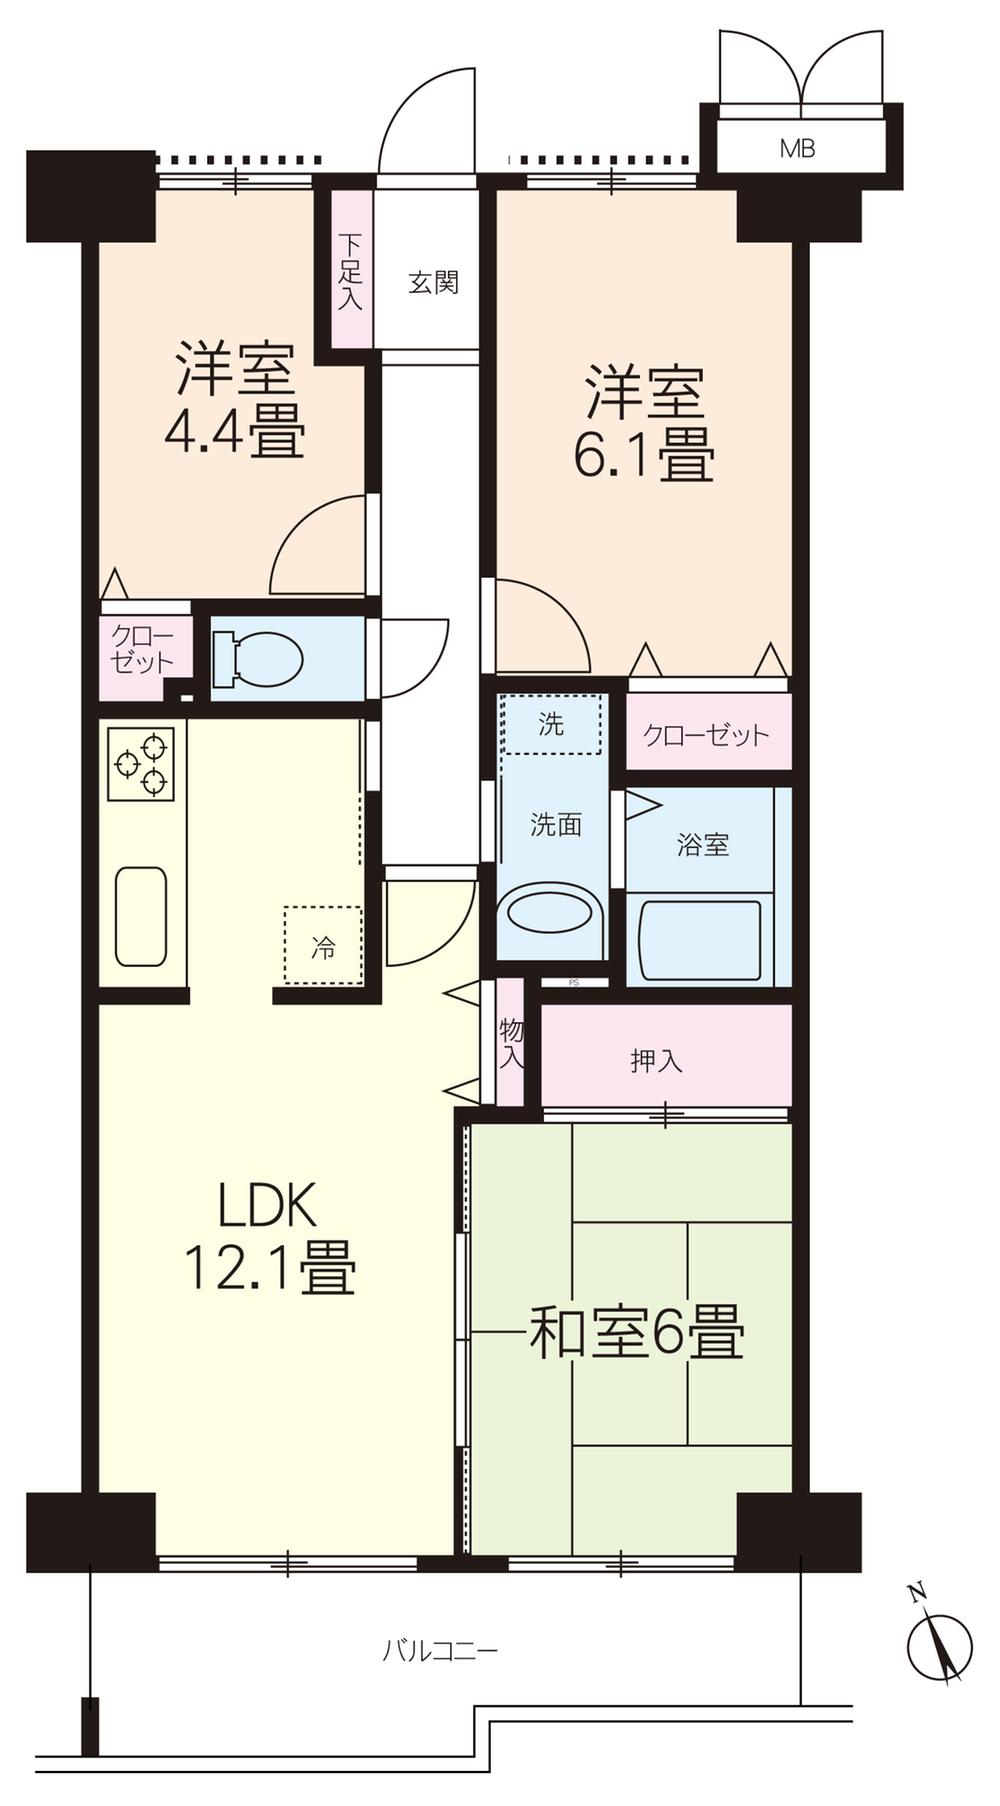 Floor plan. 3LDK, Price 14.8 million yen, Footprint 62.7 sq m , Balcony area 8.12 sq m